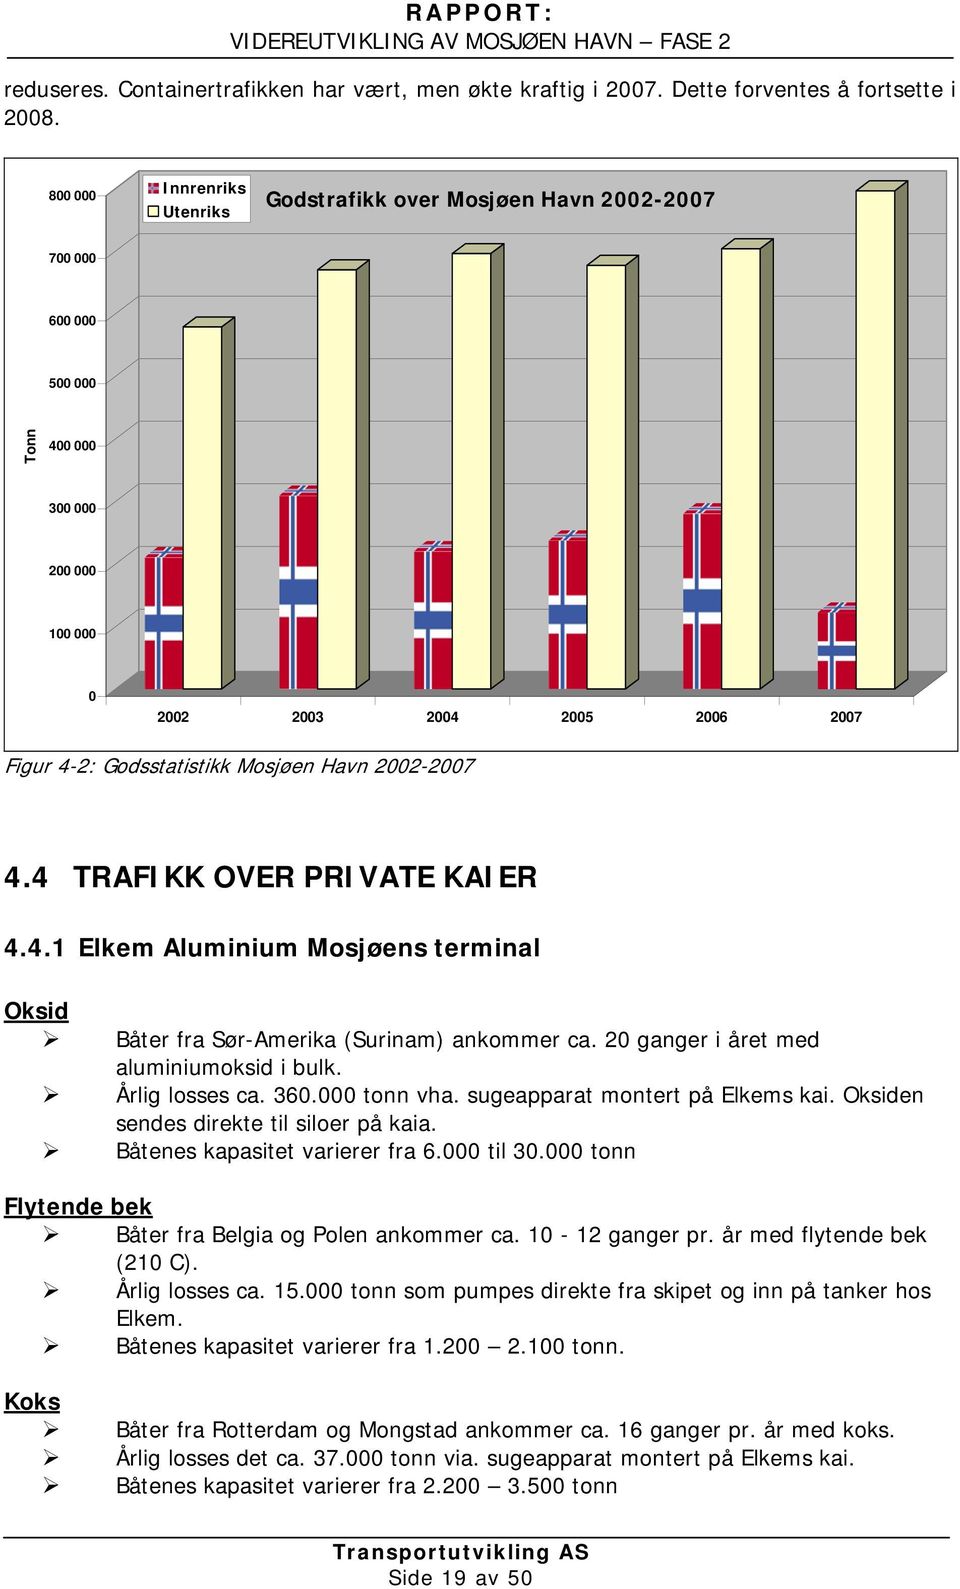 2002-2007 4.4 TRAFIKK OVER PRIVATE KAIER 4.4.1 Elkem Aluminium Mosjøens terminal Oksid Båter fra Sør-Amerika (Surinam) ankommer ca. 20 ganger i året med aluminiumoksid i bulk. Årlig losses ca. 360.